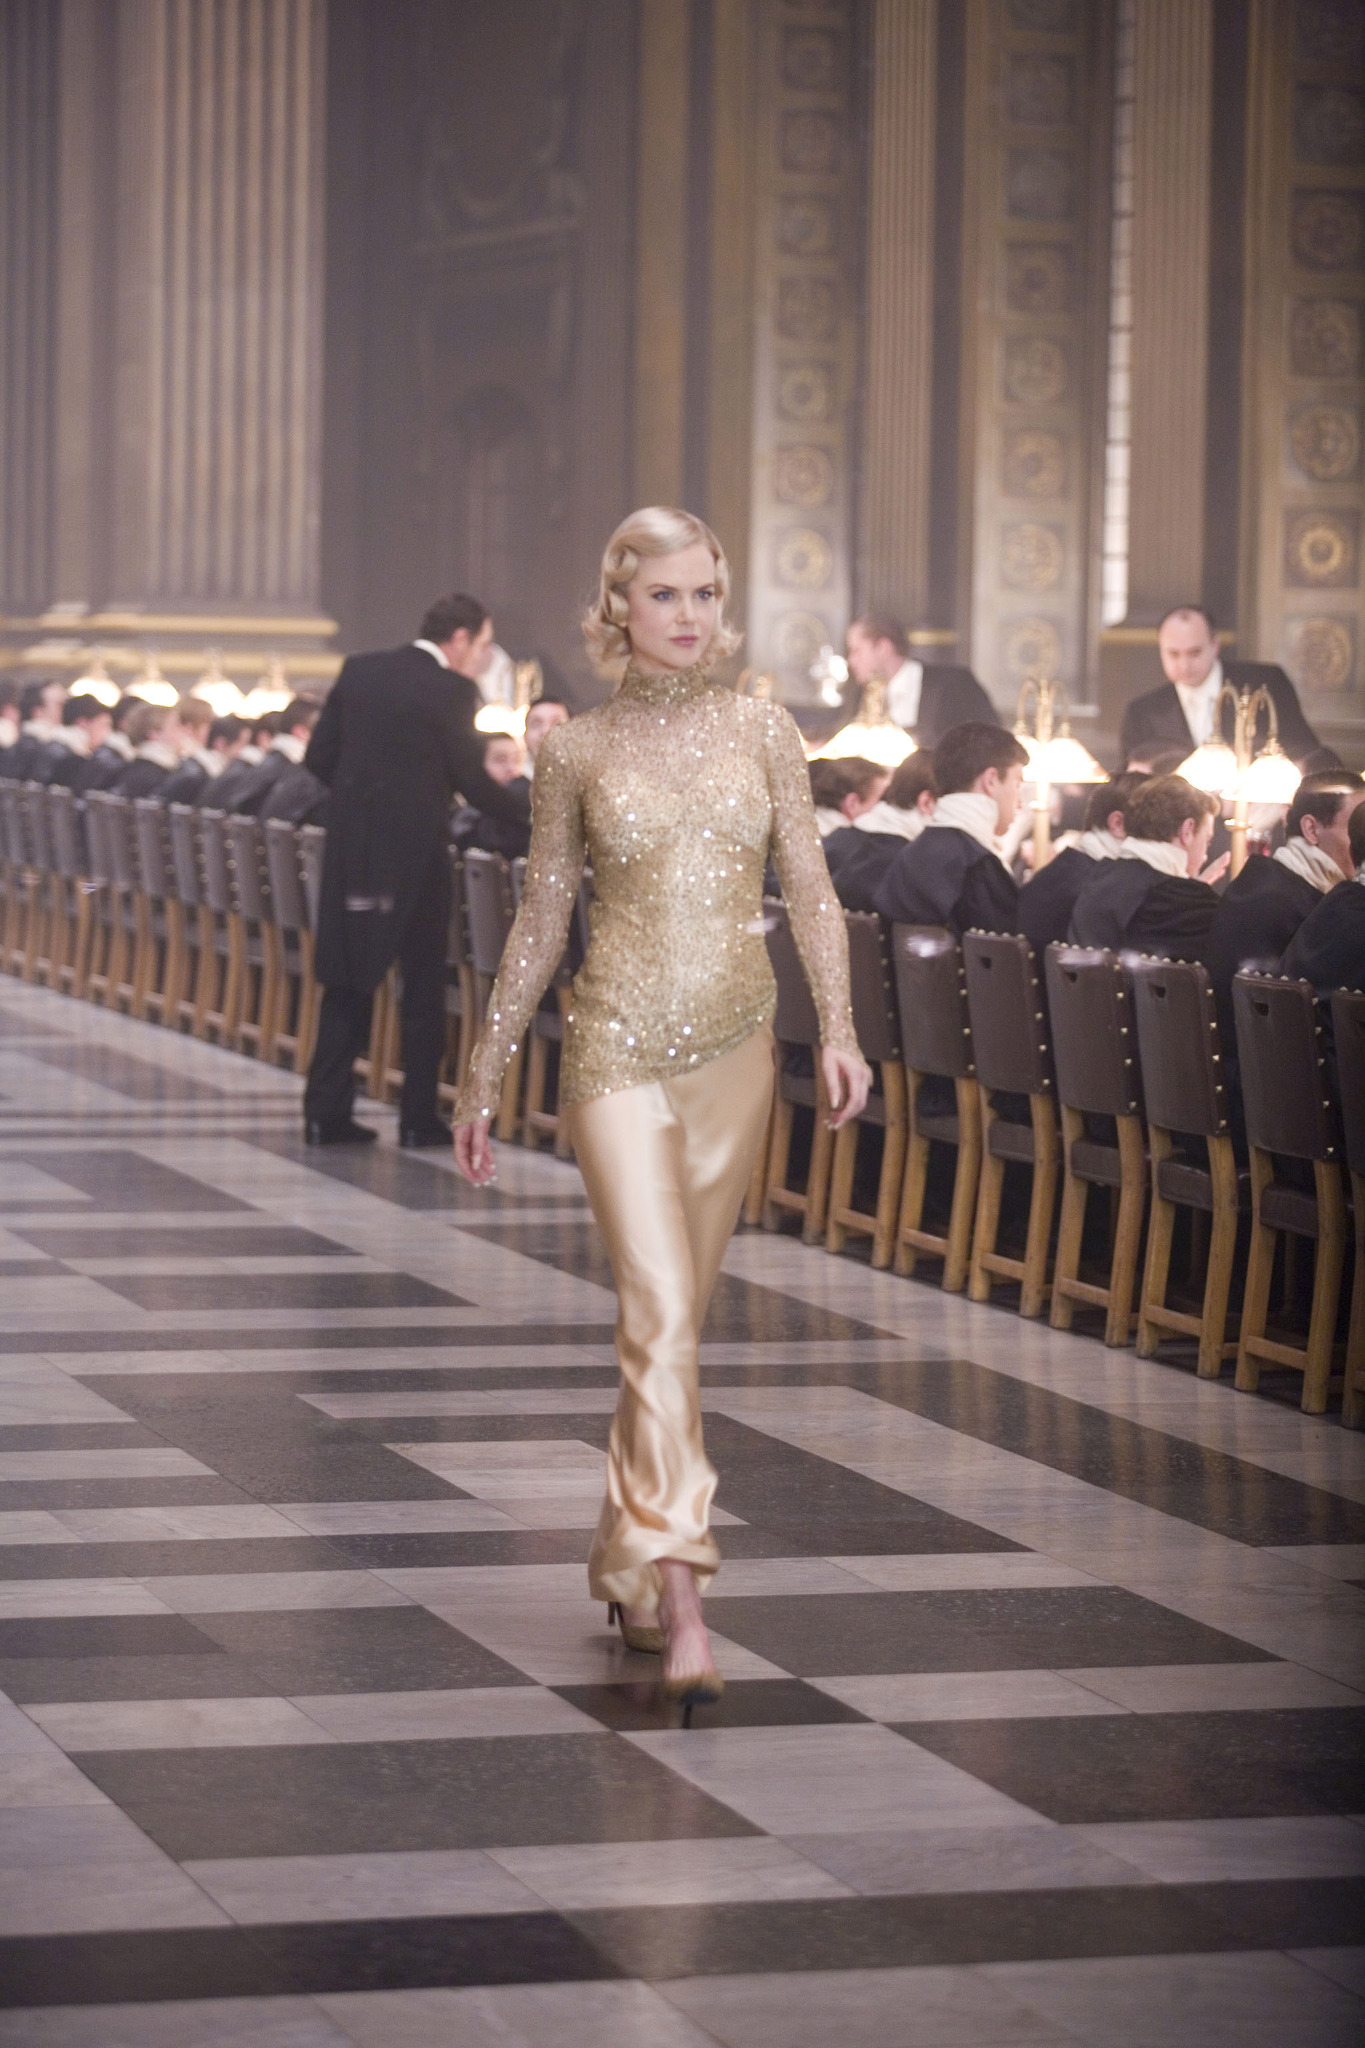 Still of Nicole Kidman in The Golden Compass (2007)